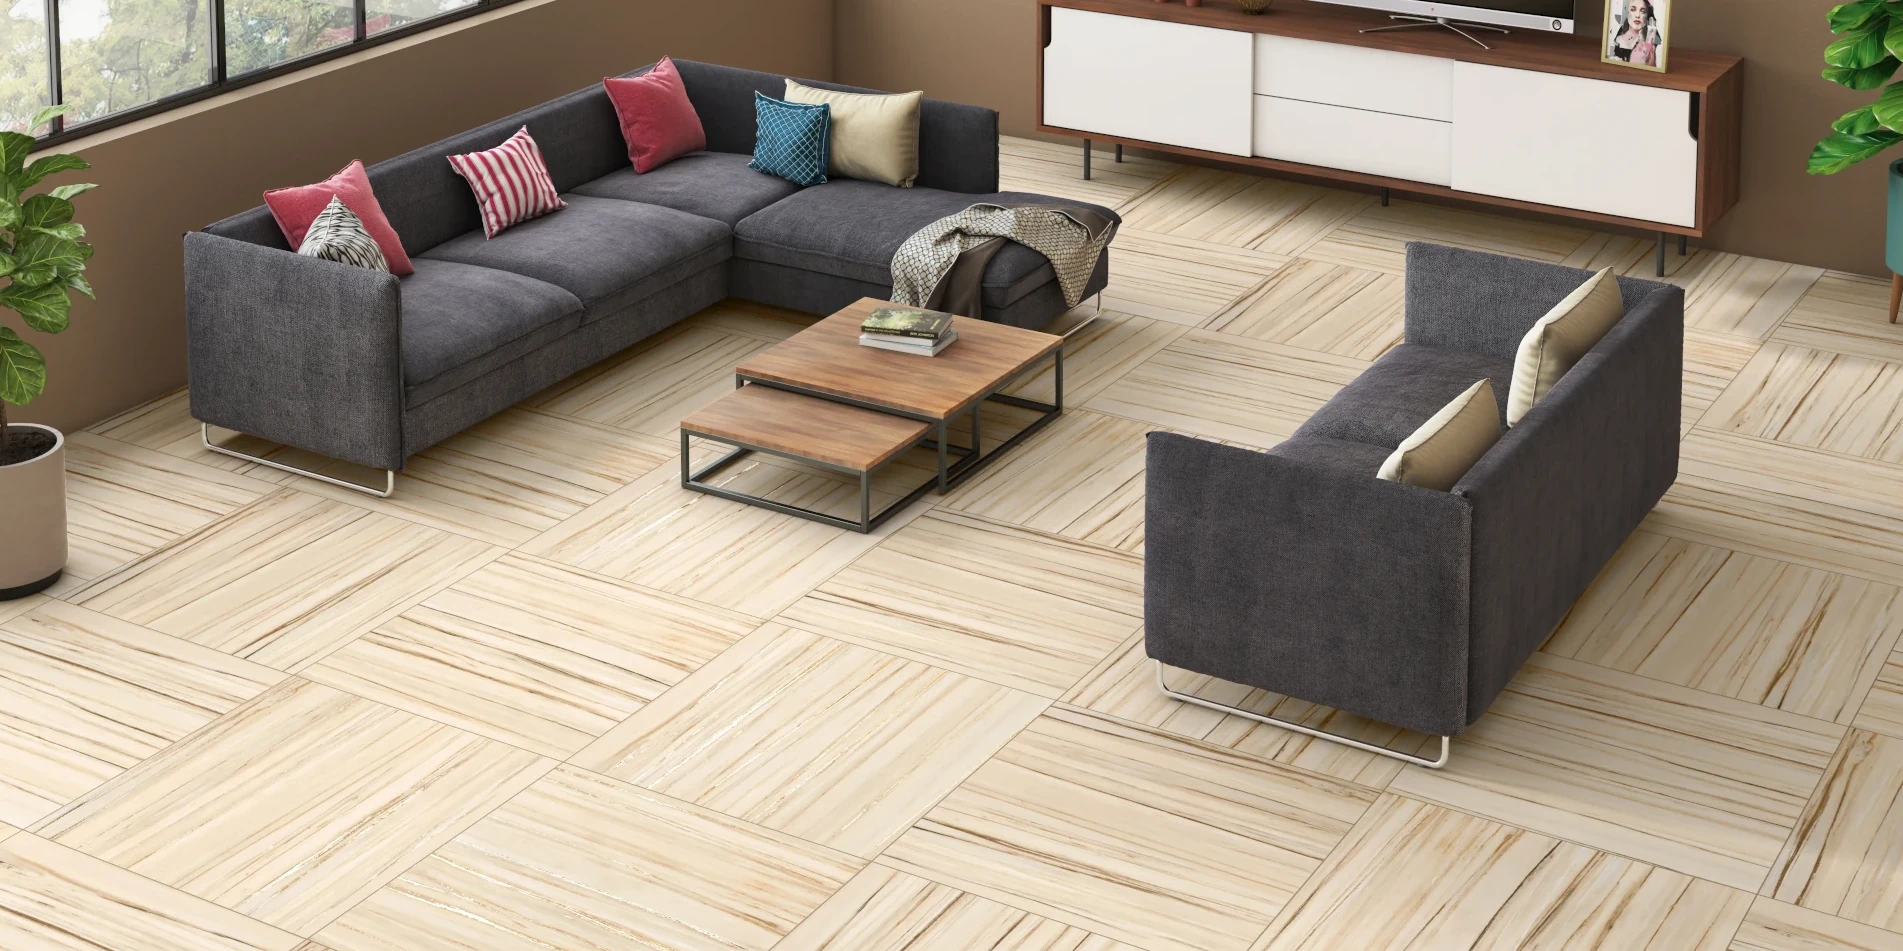 Fusion Surface floor tiles